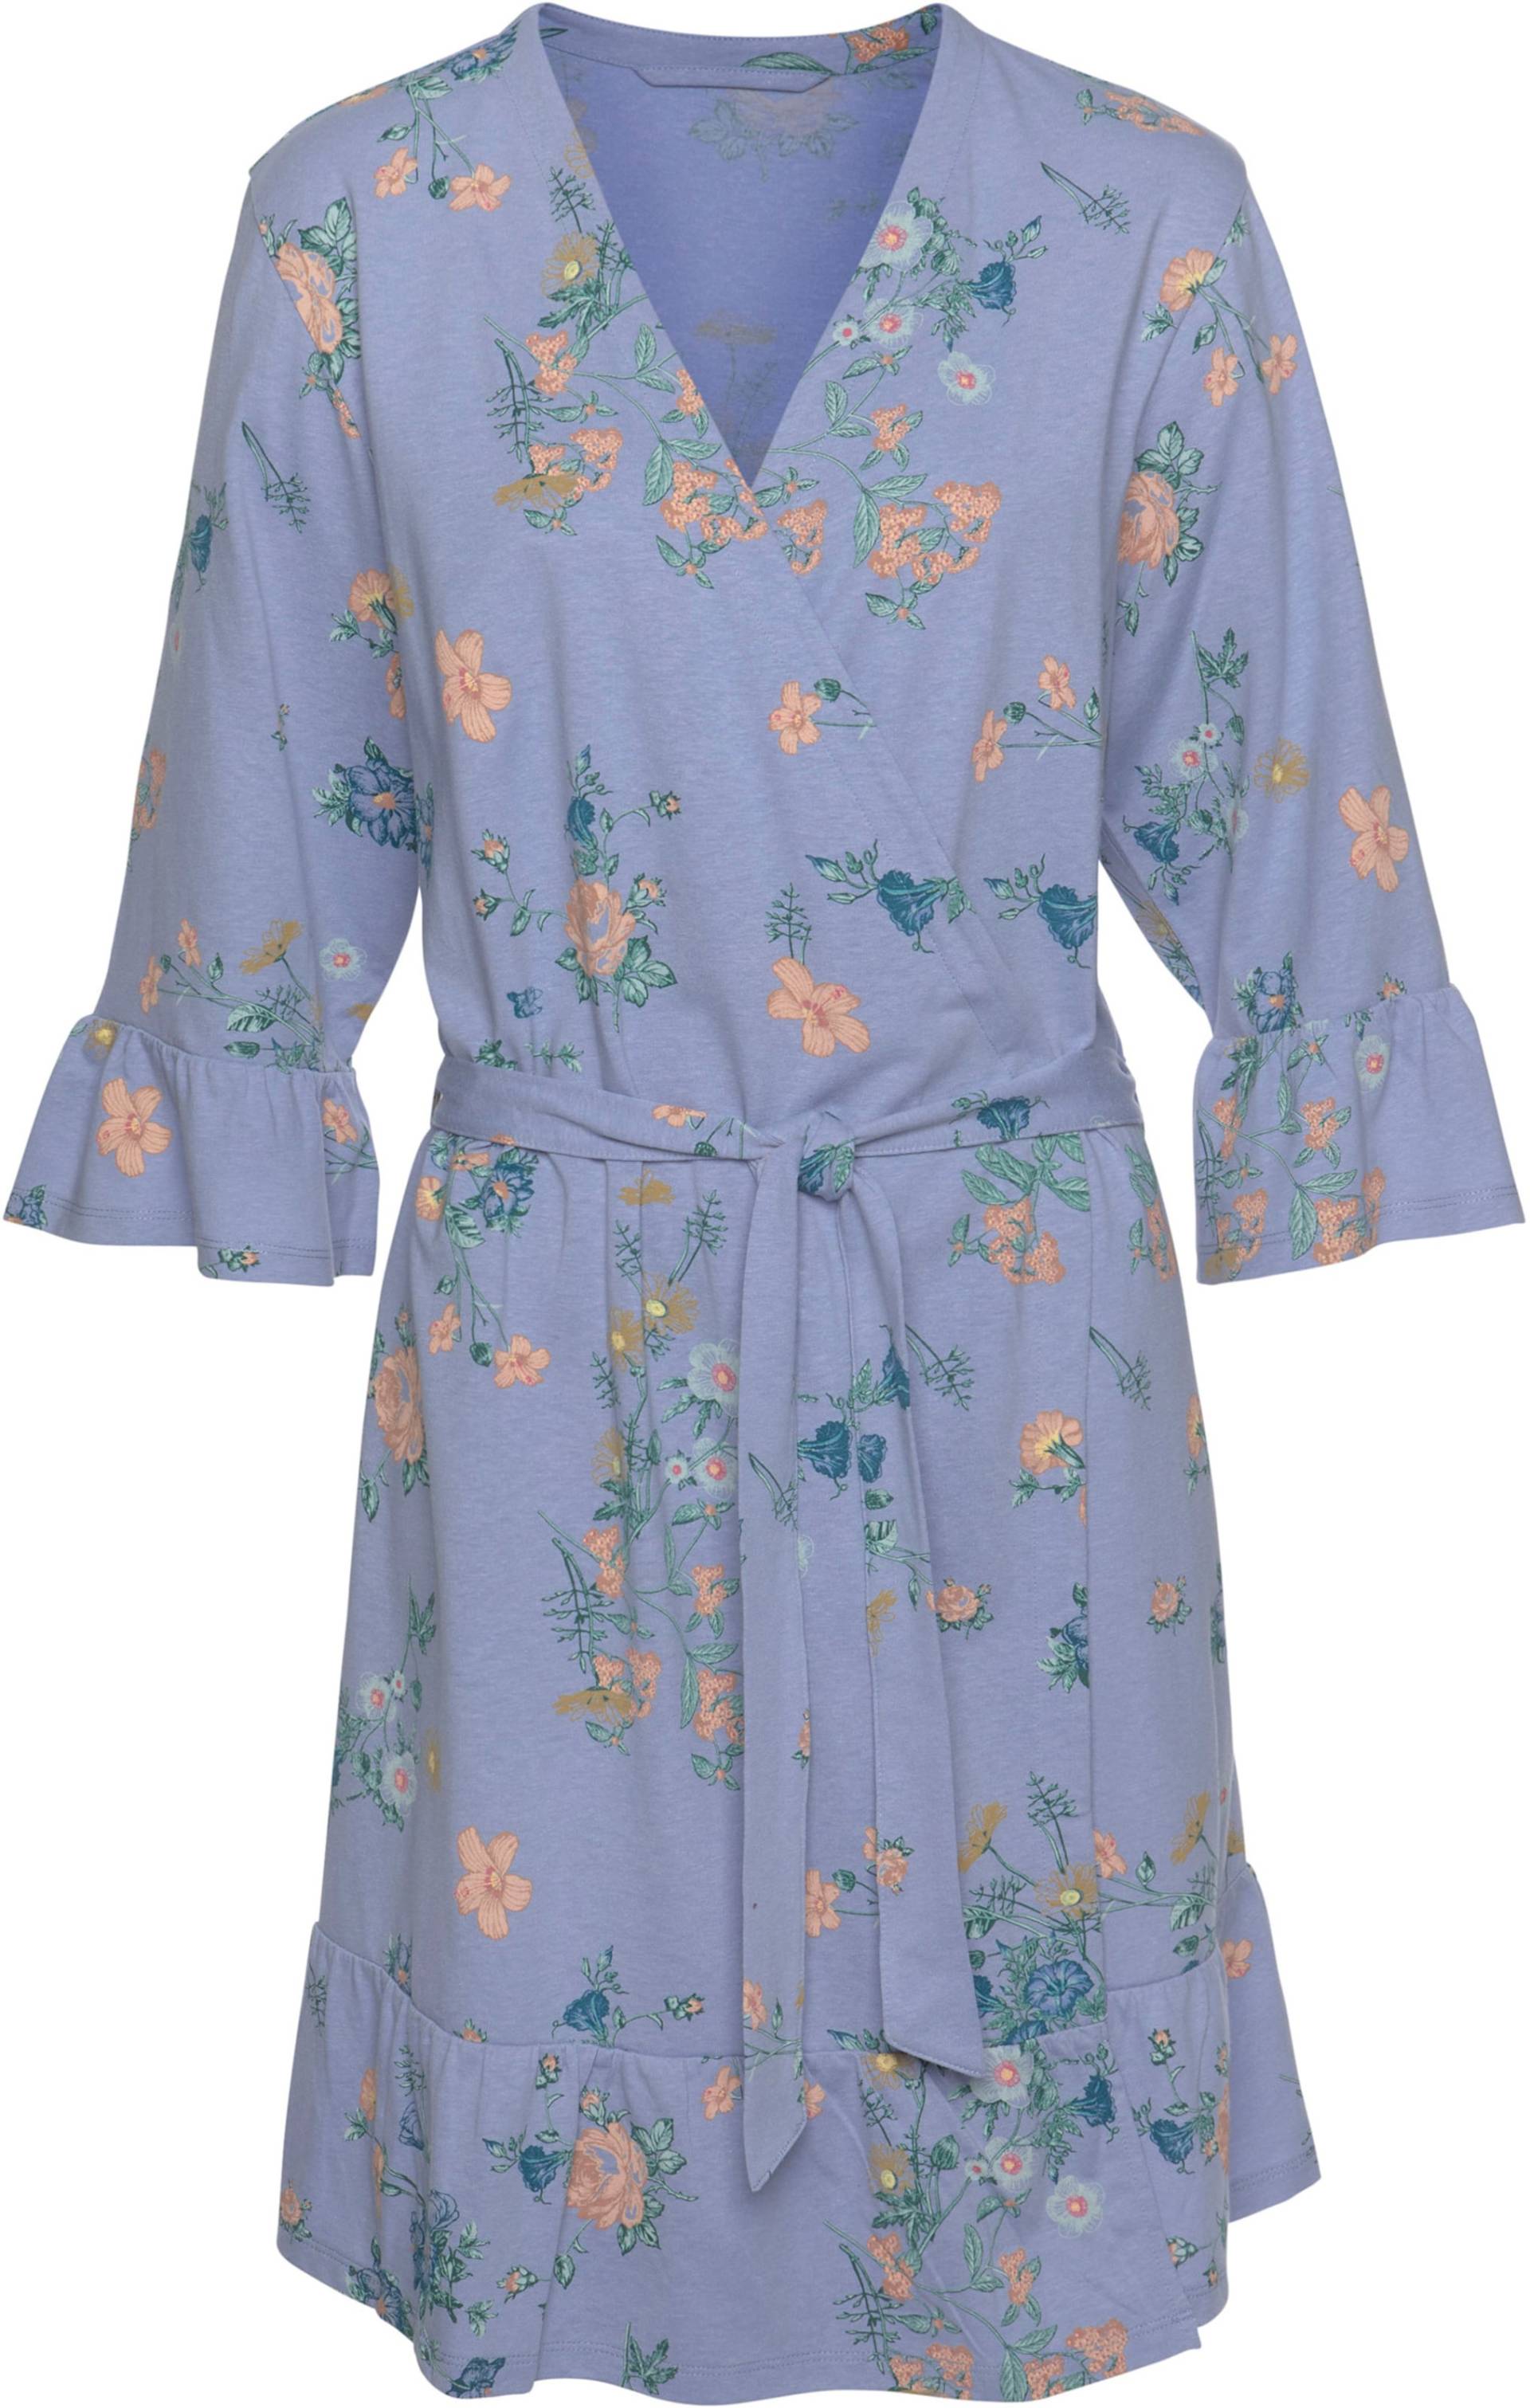 Kimono in lavendel-allover-geblümt von Vivance Dreams